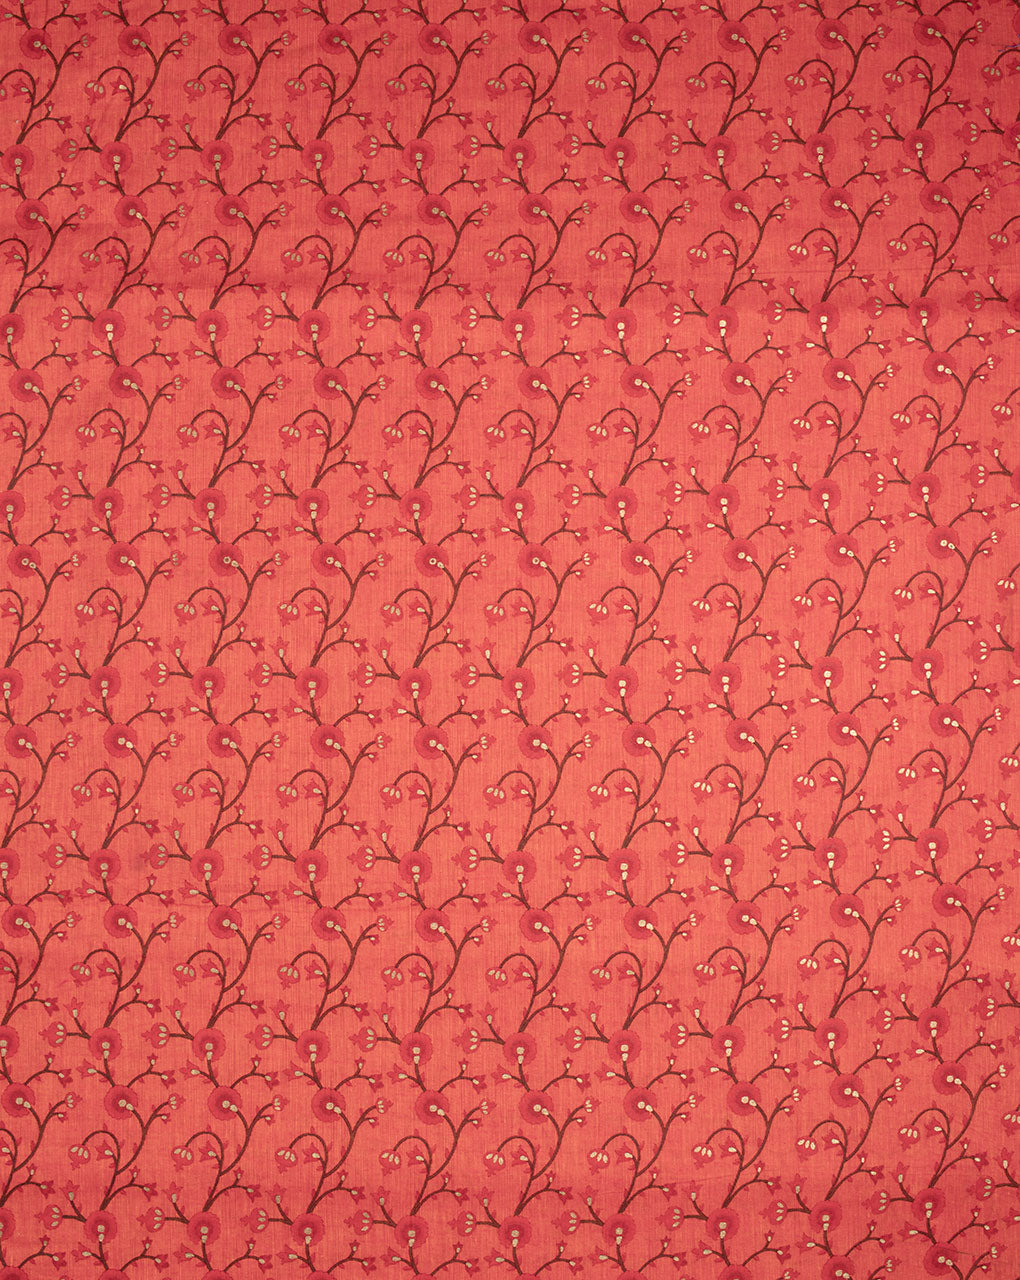 Screen Print BordeLoom Textured Cotton Fabric - Fabriclore.com